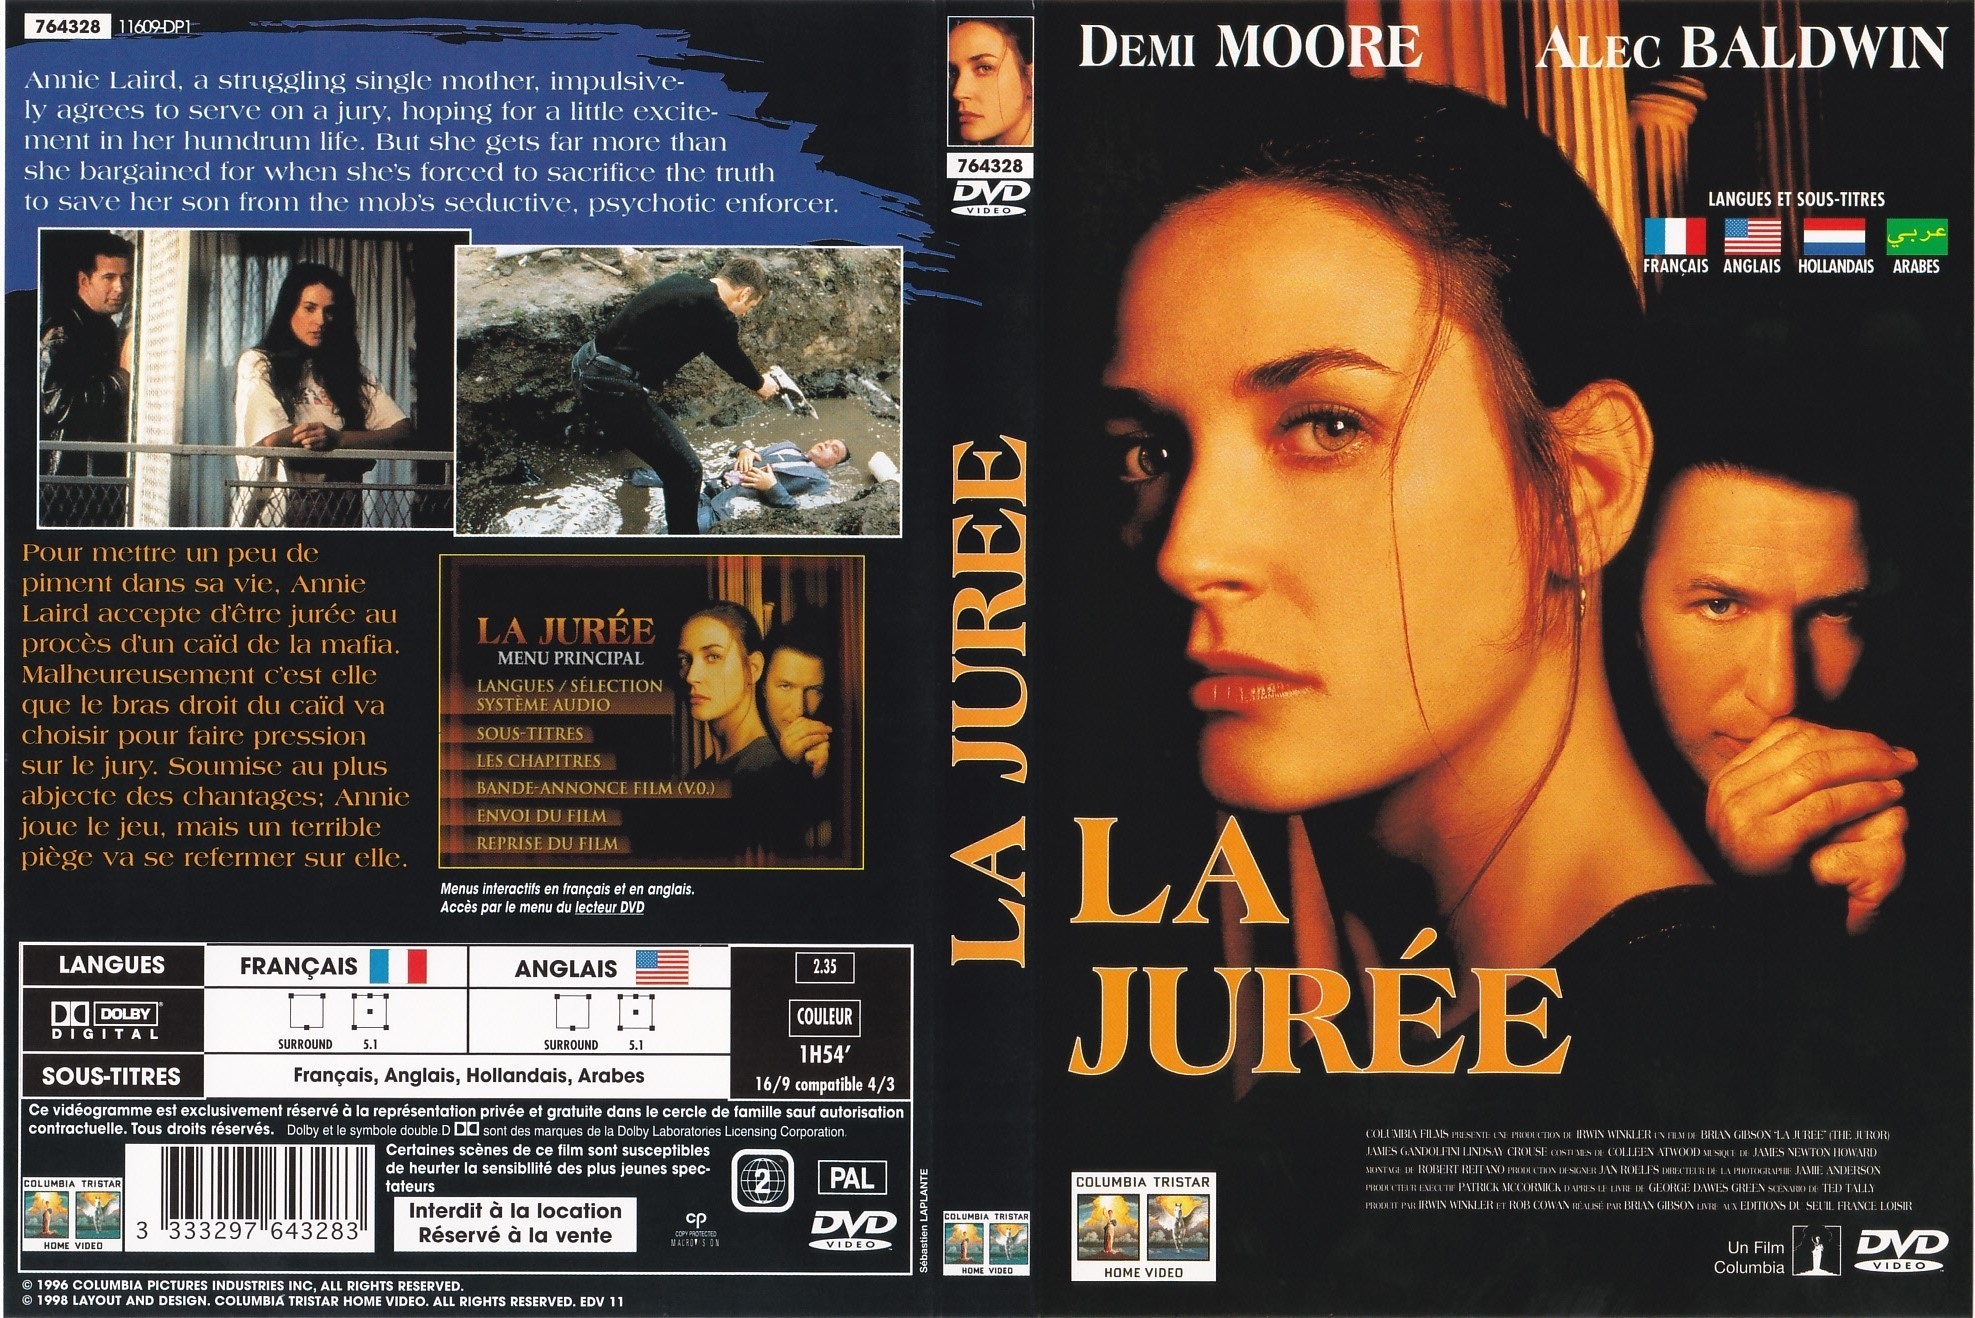 Jaquette DVD La Jure v2